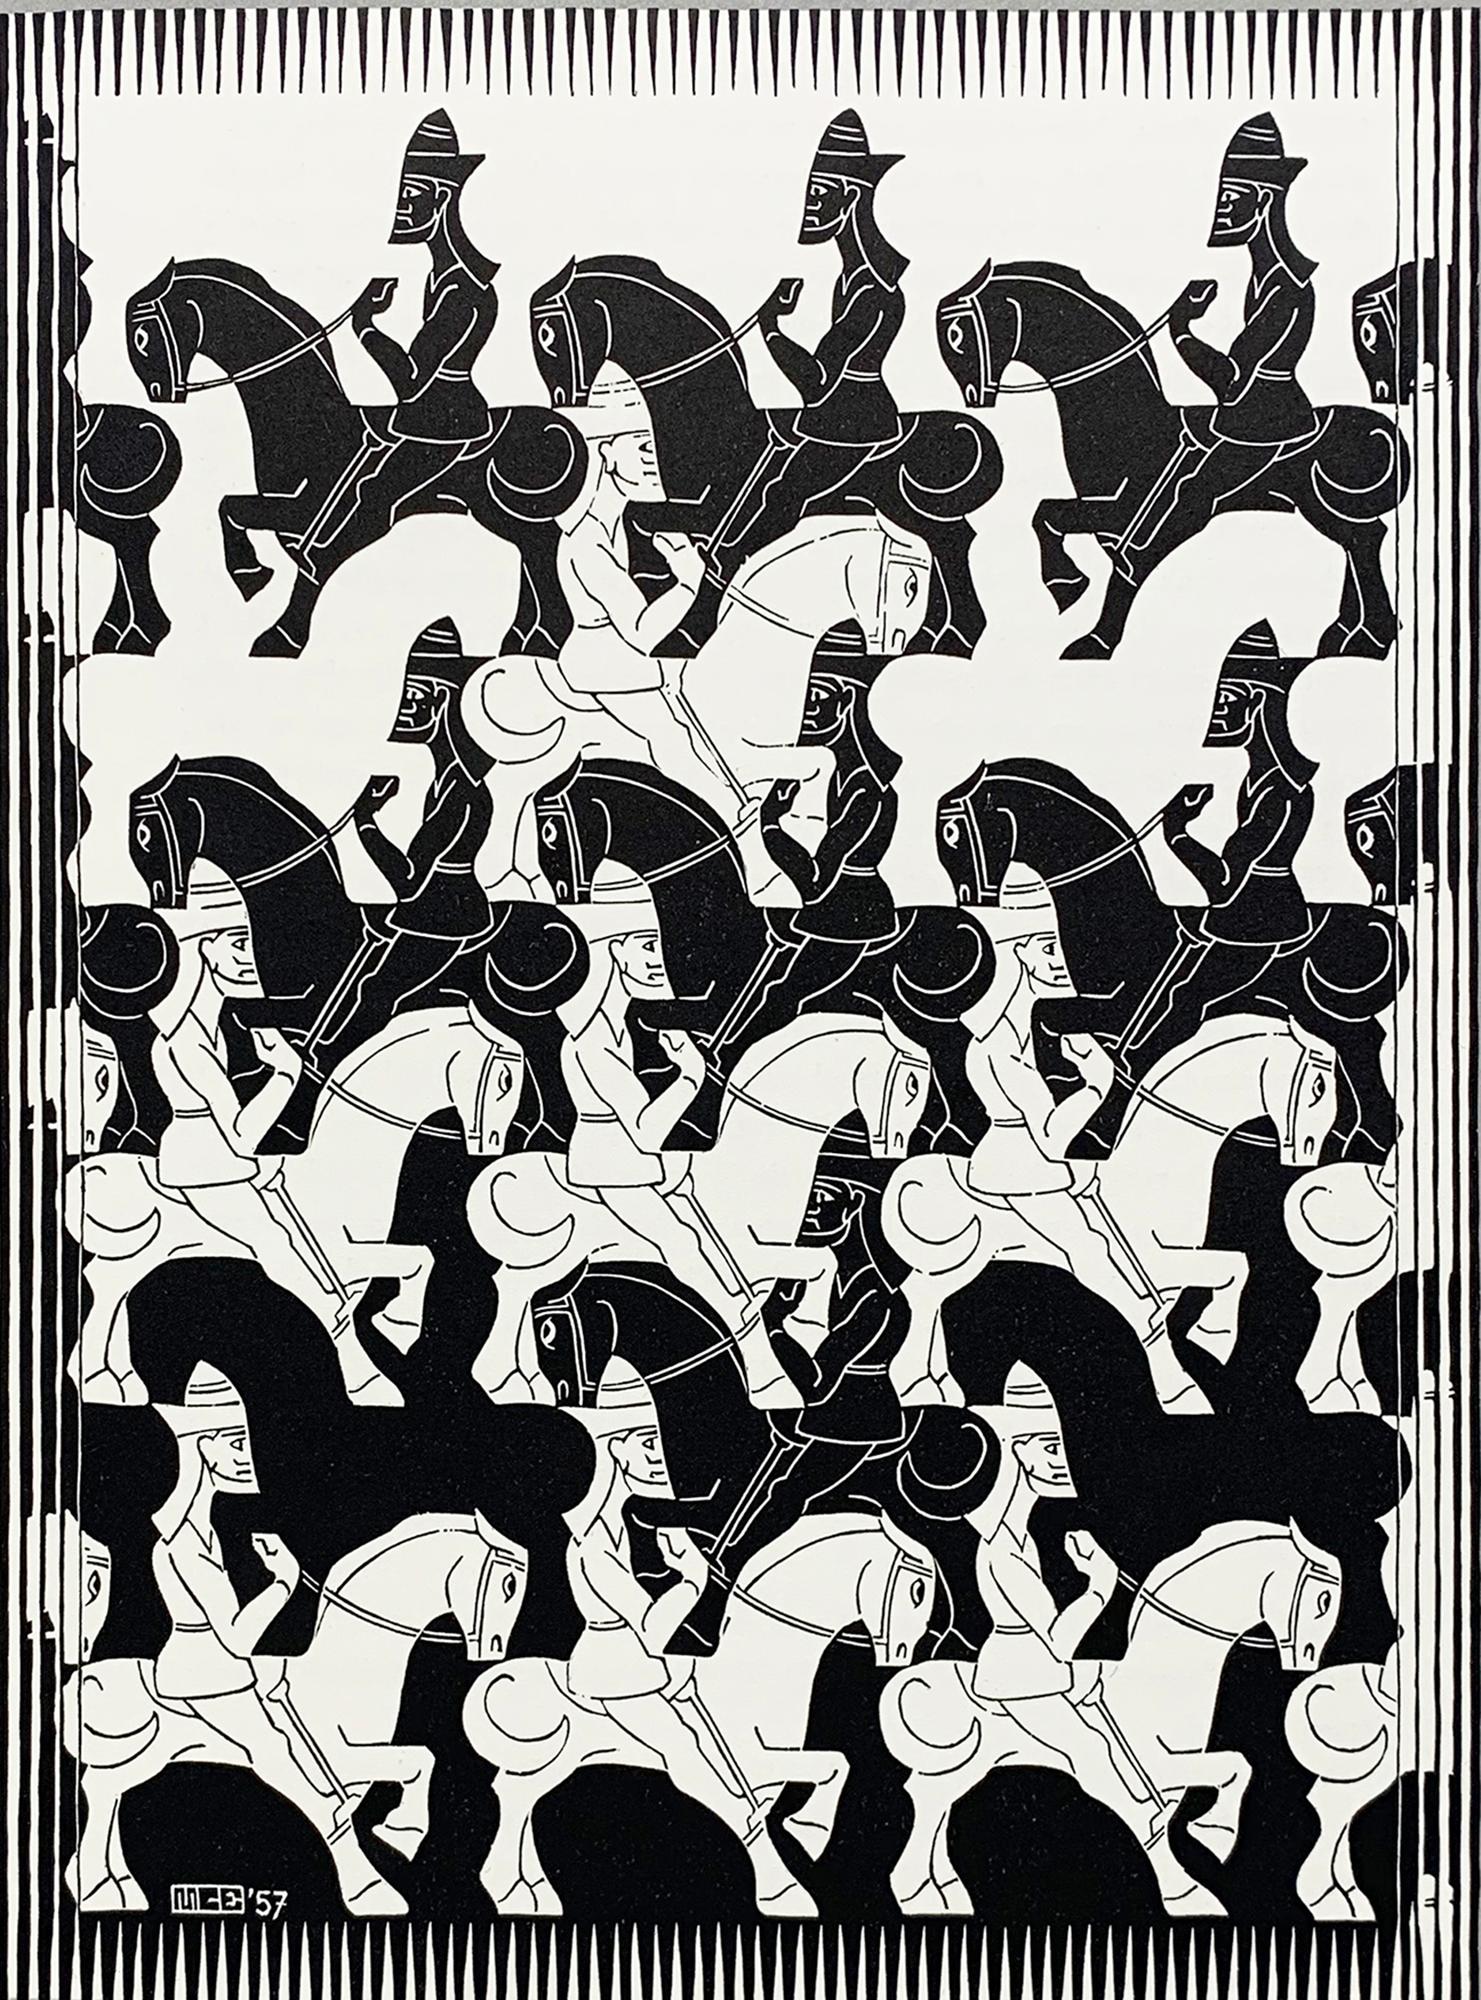 Regular Division of the Plane III "Horsemen" - Print by M.C. Escher